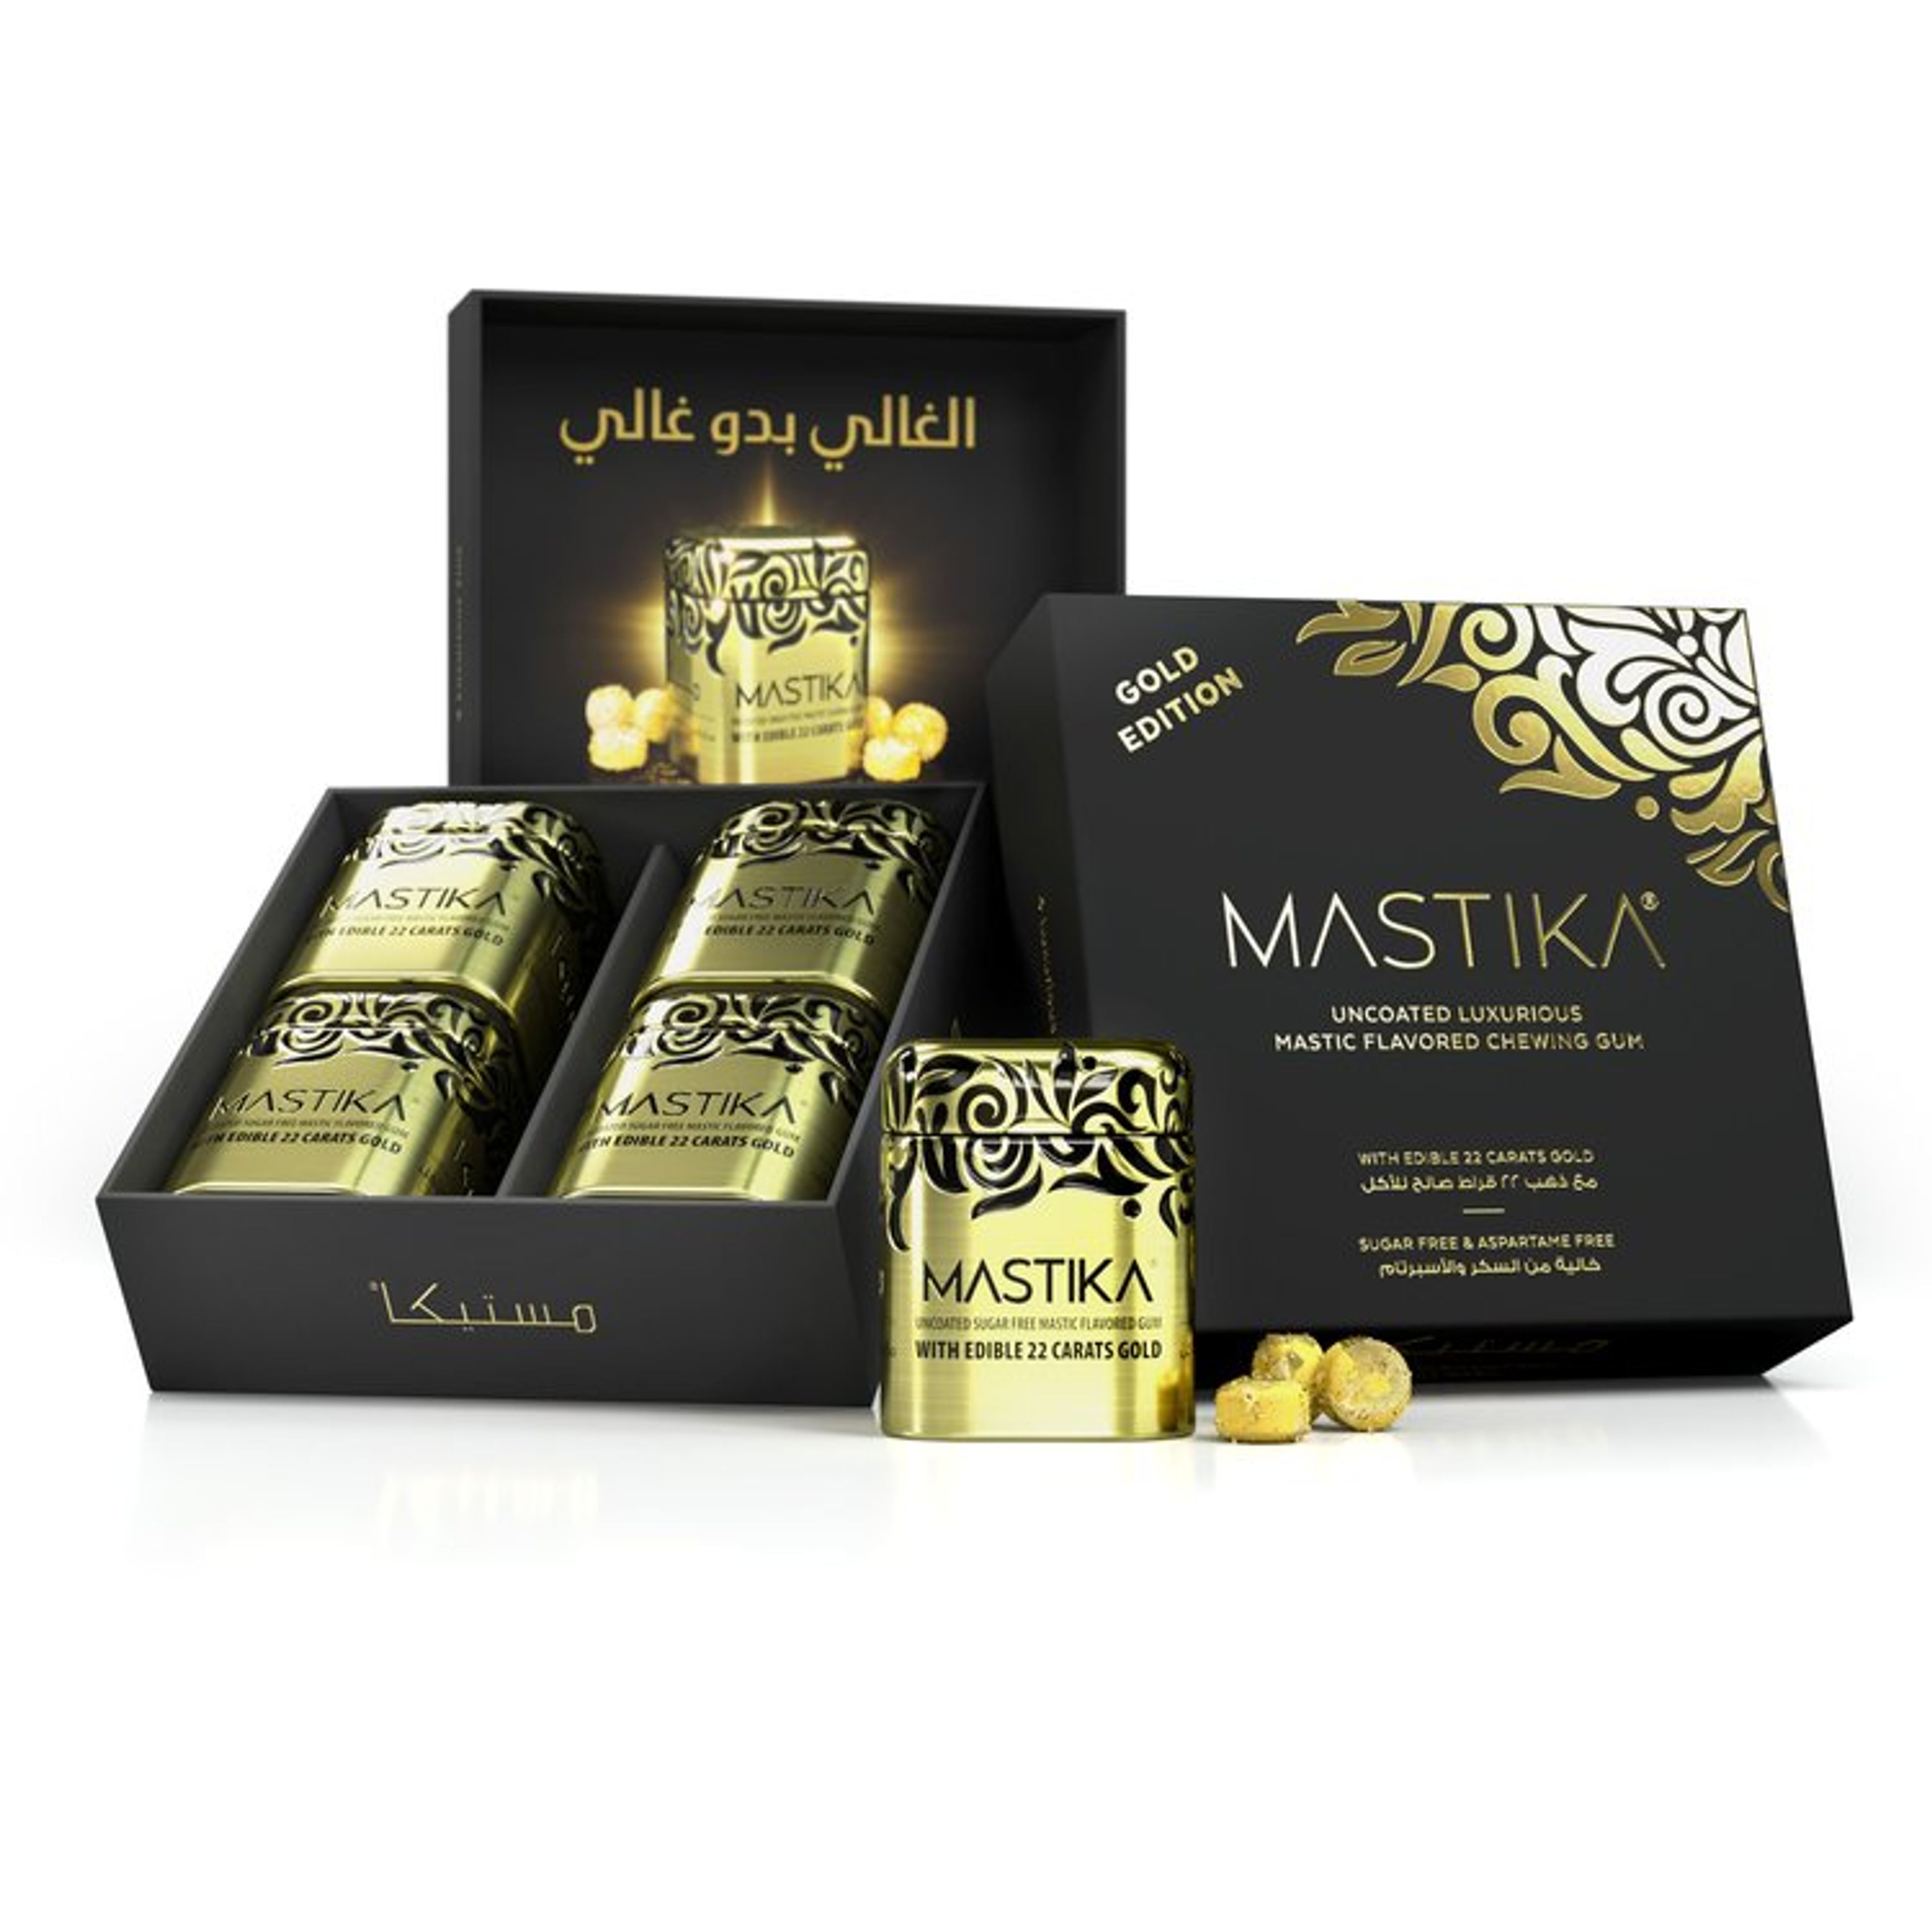 Mastika Gum Gold Edition